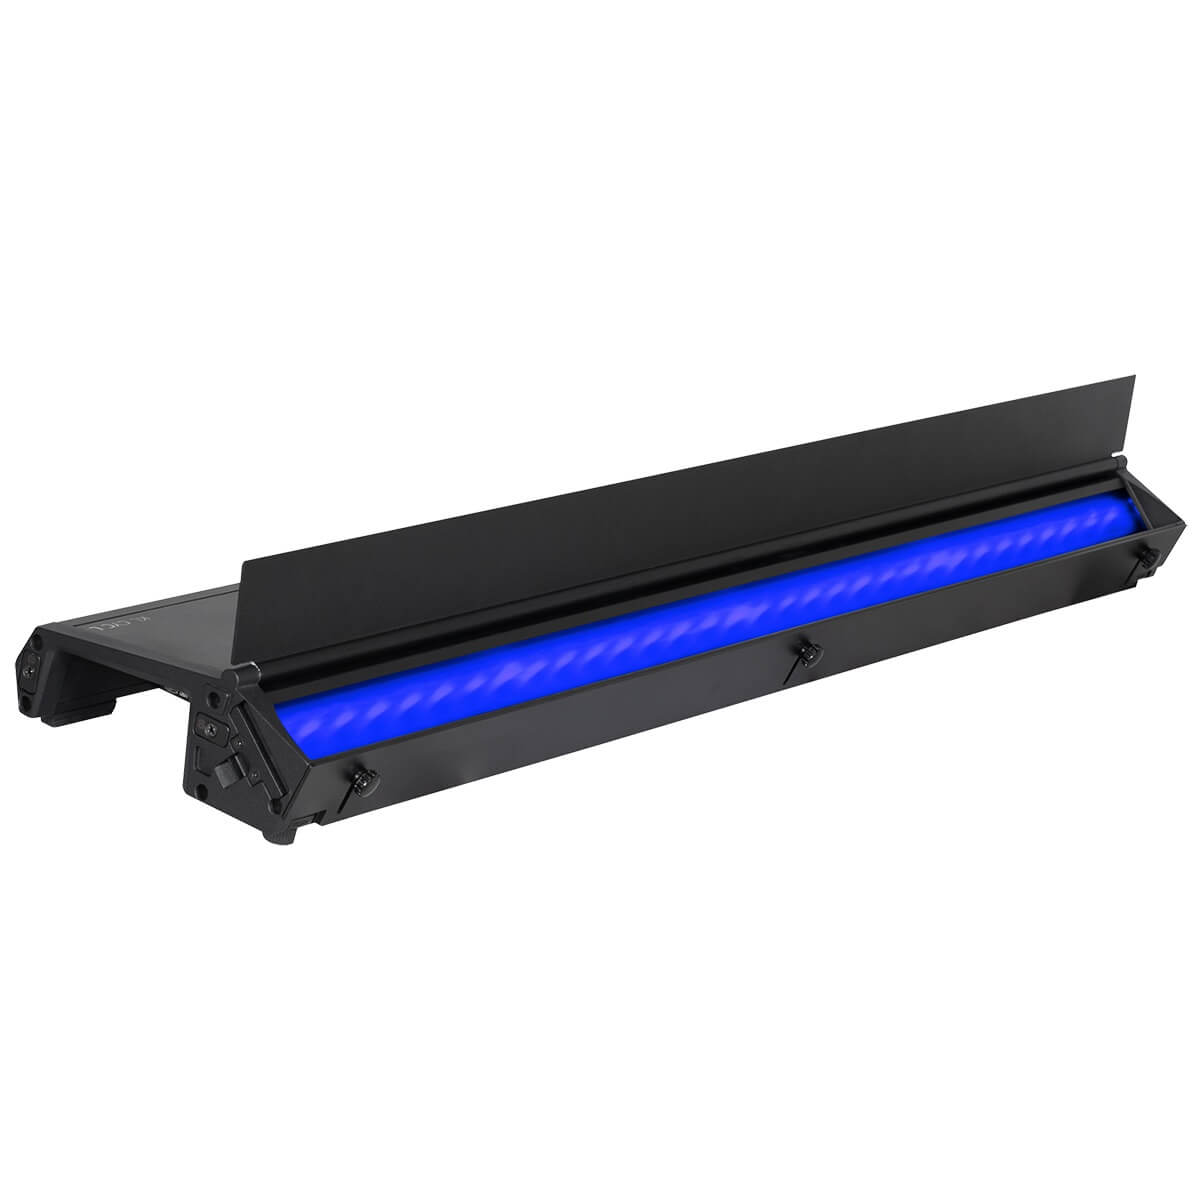 Elation KL CYC L - RGBMA LED Cyc Light and Footlight Fixture, lit blue